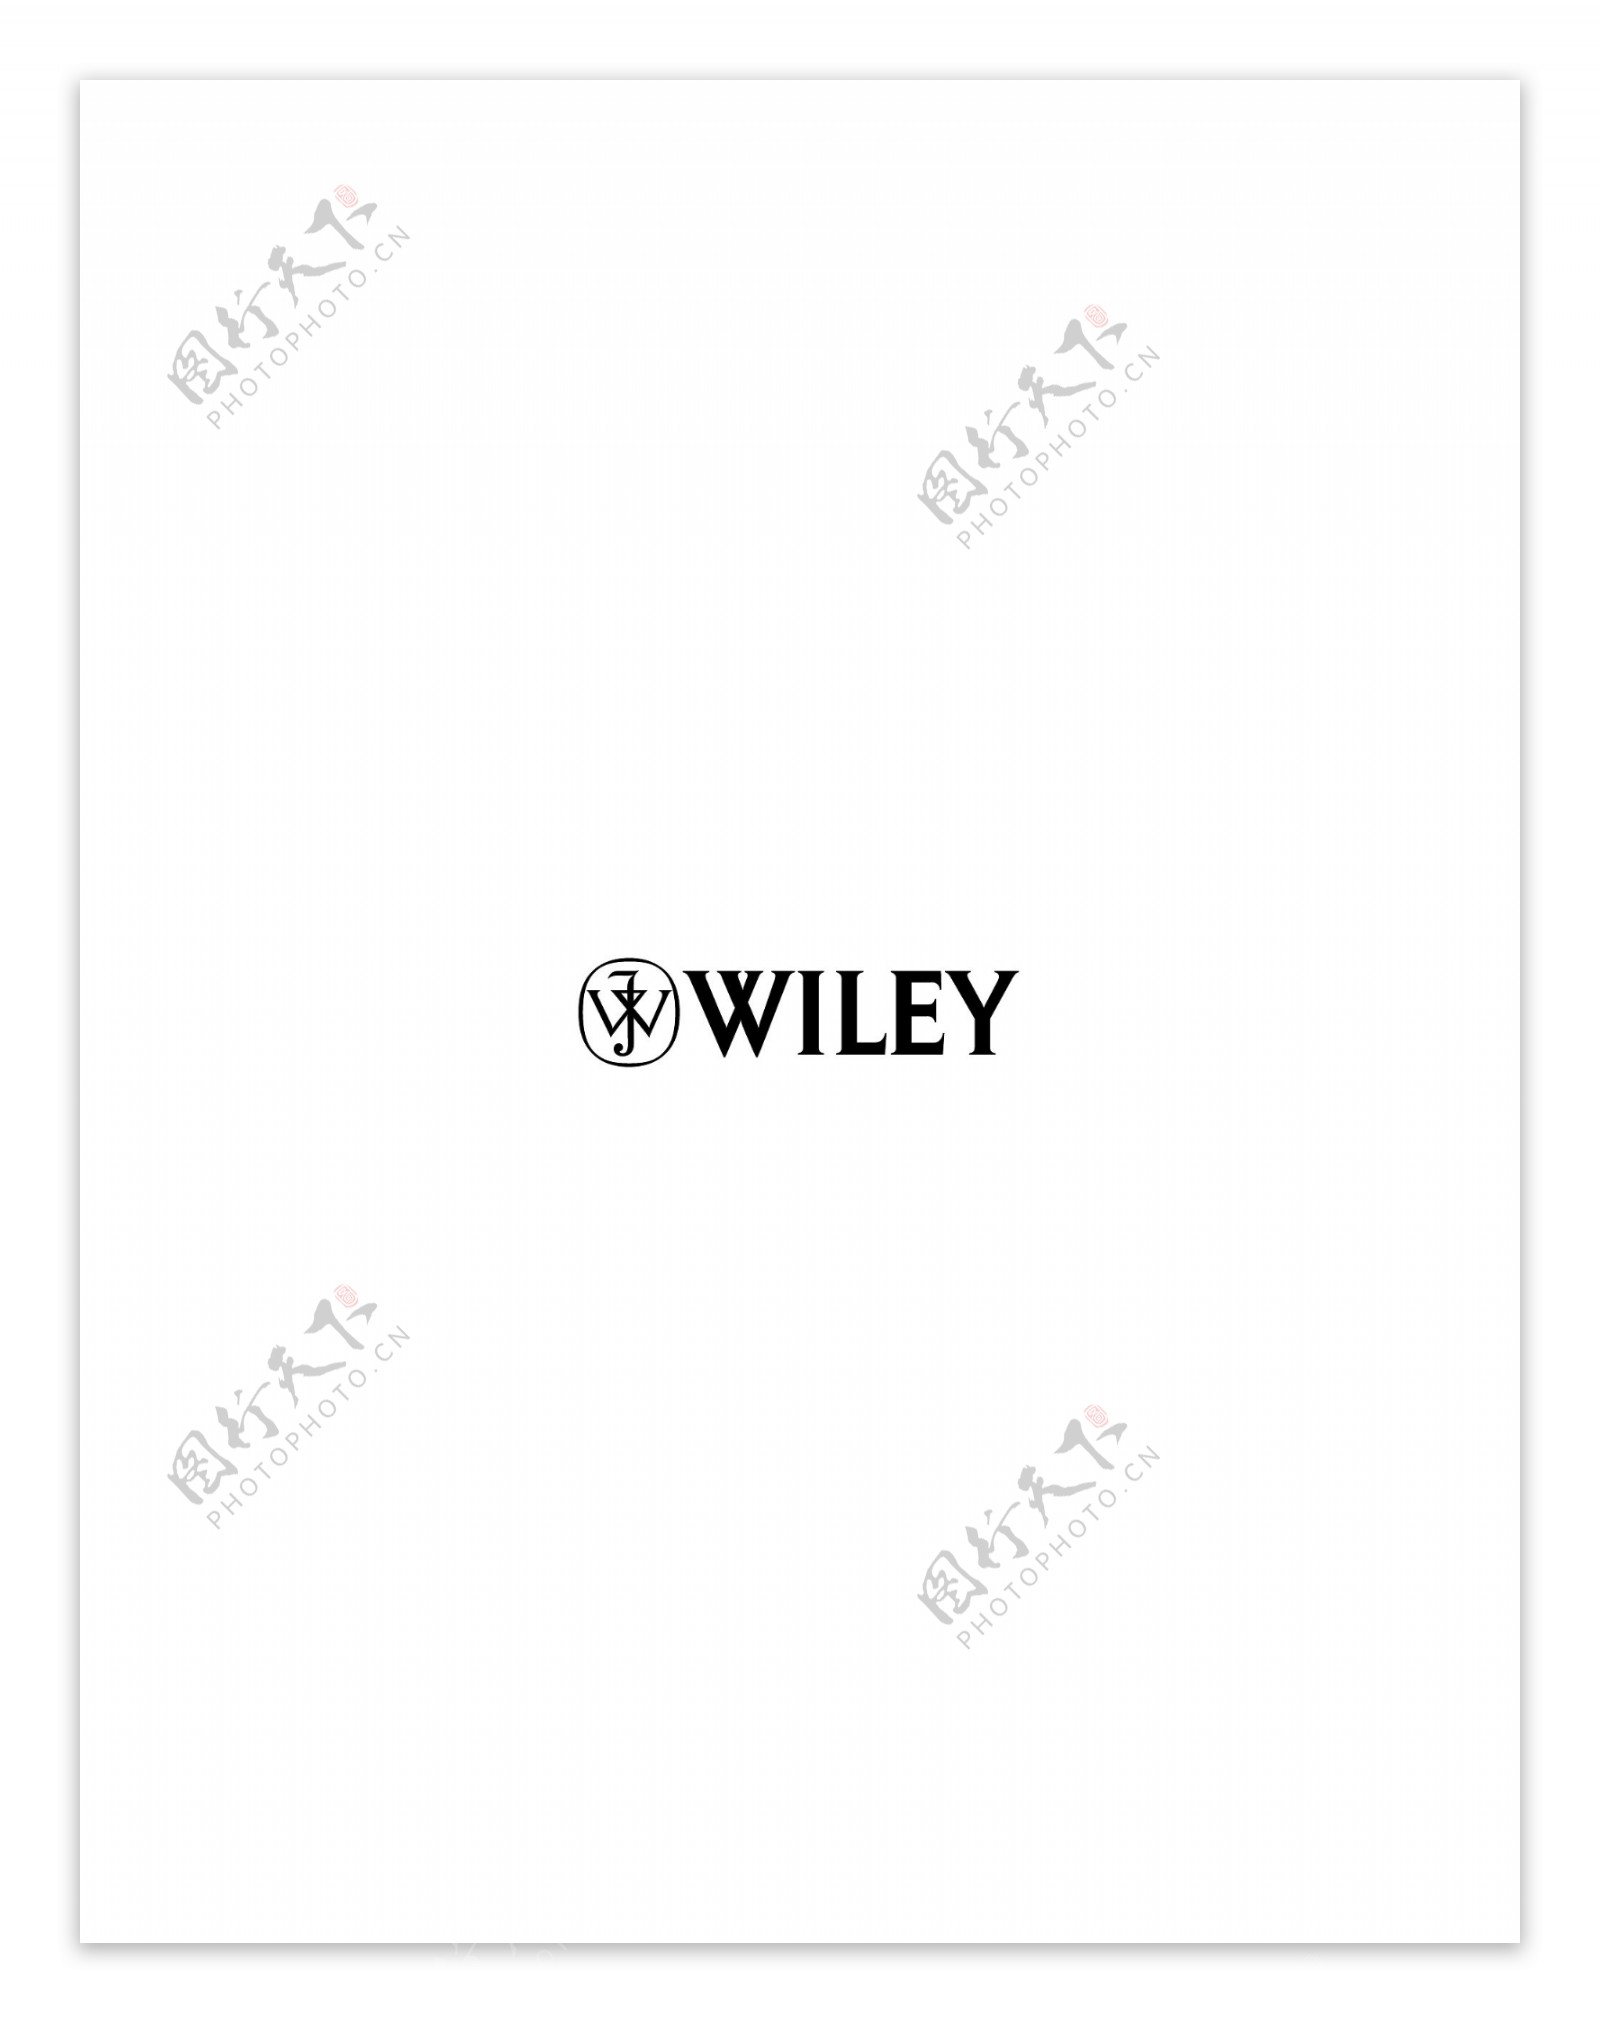 Wileylogo设计欣赏国外知名公司标志范例Wiley下载标志设计欣赏